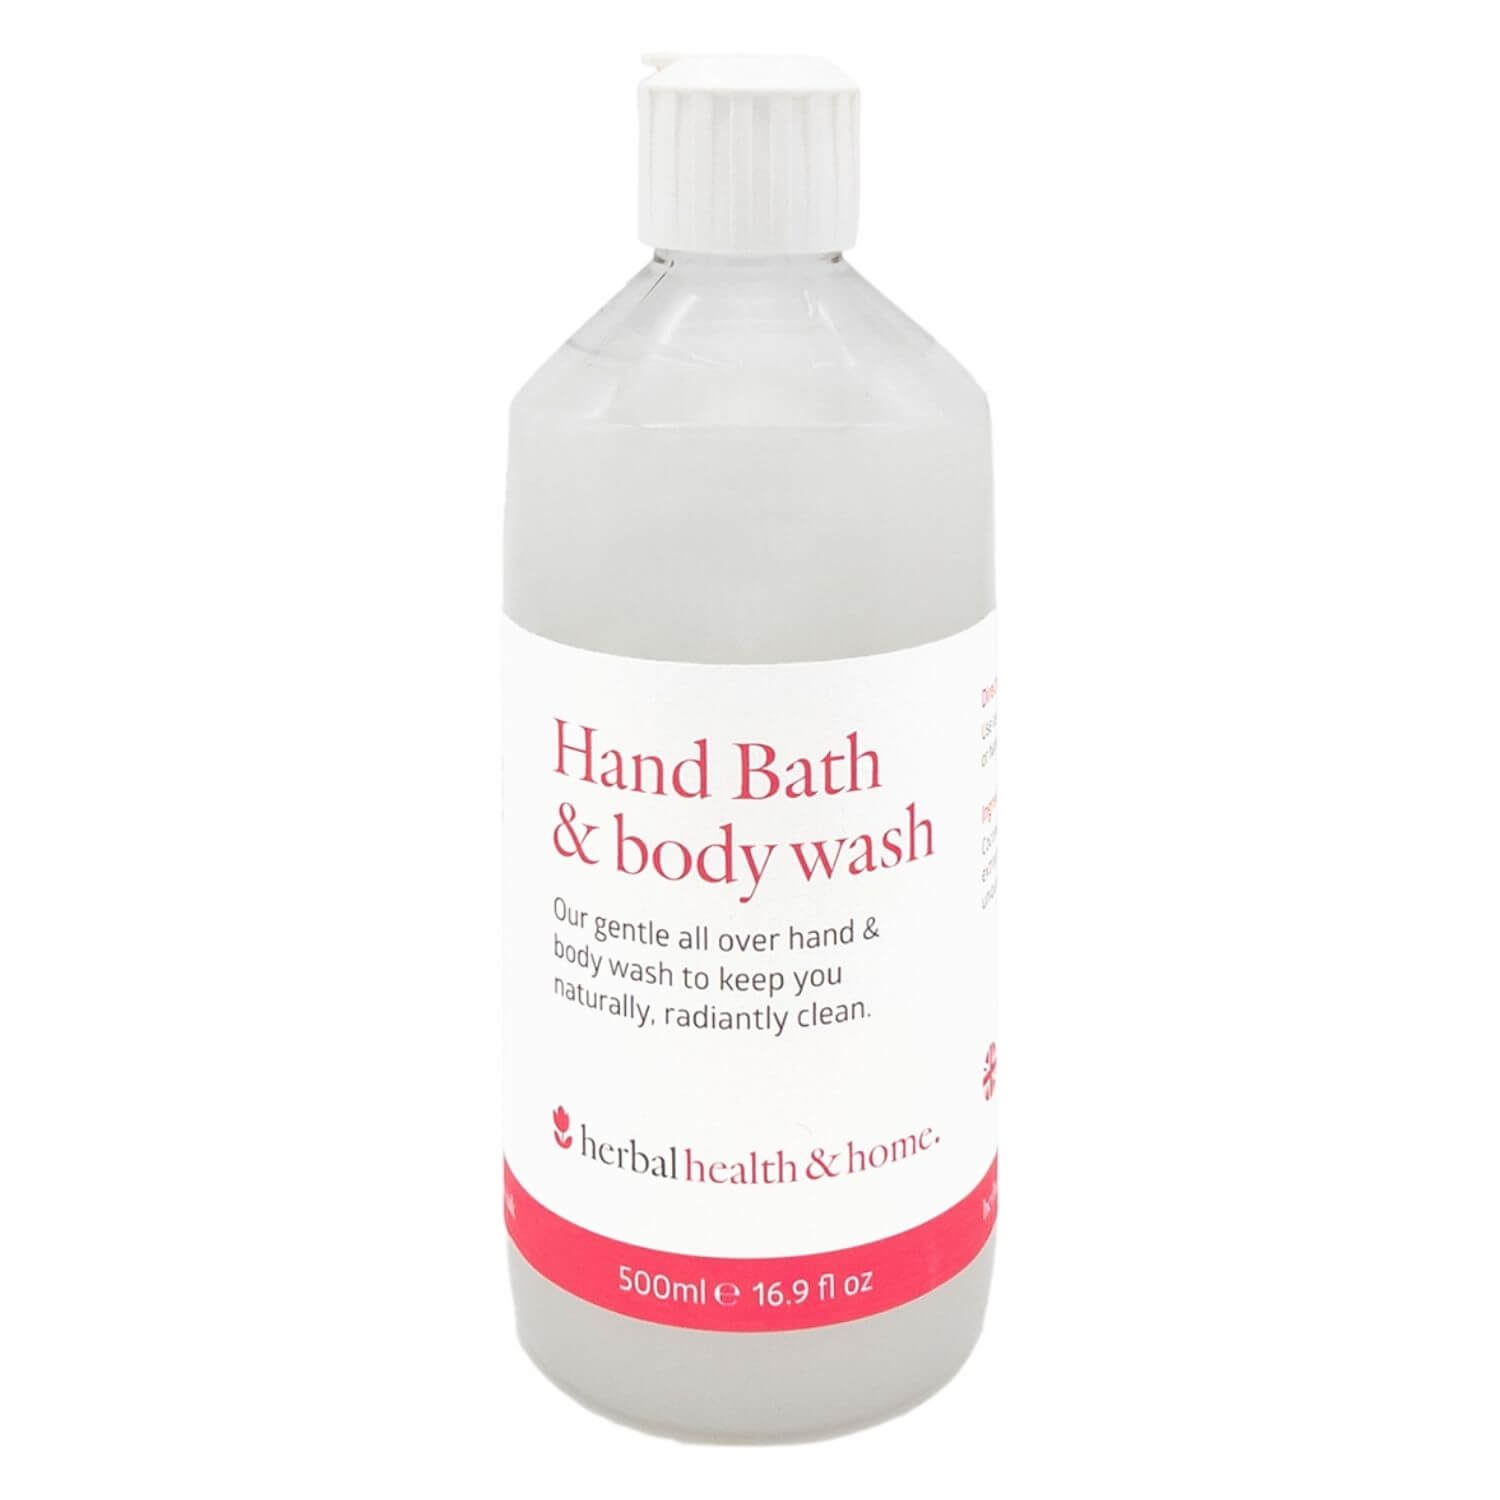 Bath & Body Wash | Herbal, Health & Home